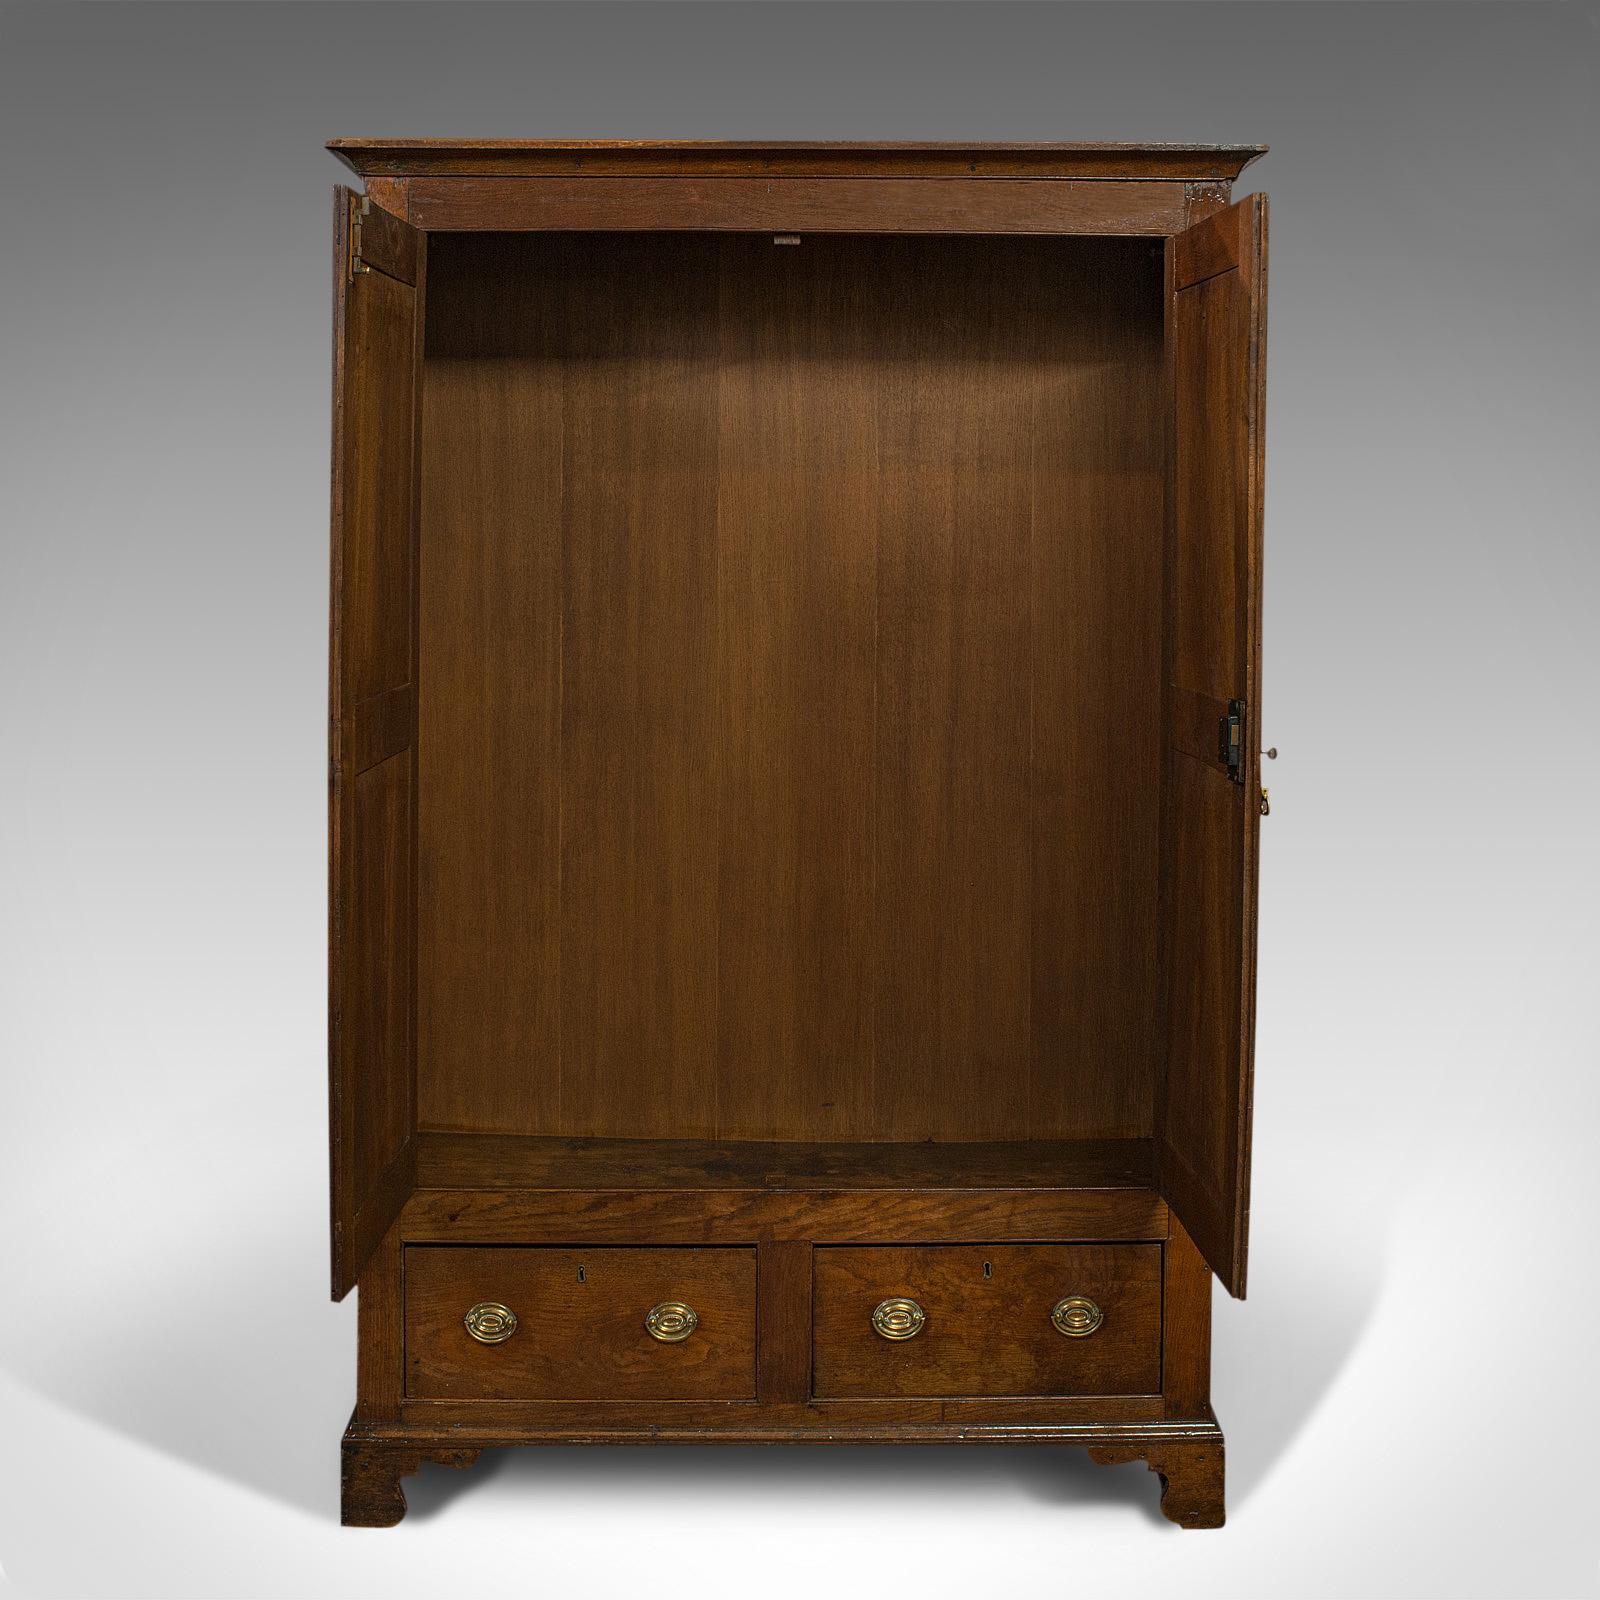 British Antique Wardrobe English Oak Linen Cabinet, Press Cupboard, Georgian, circa 1800